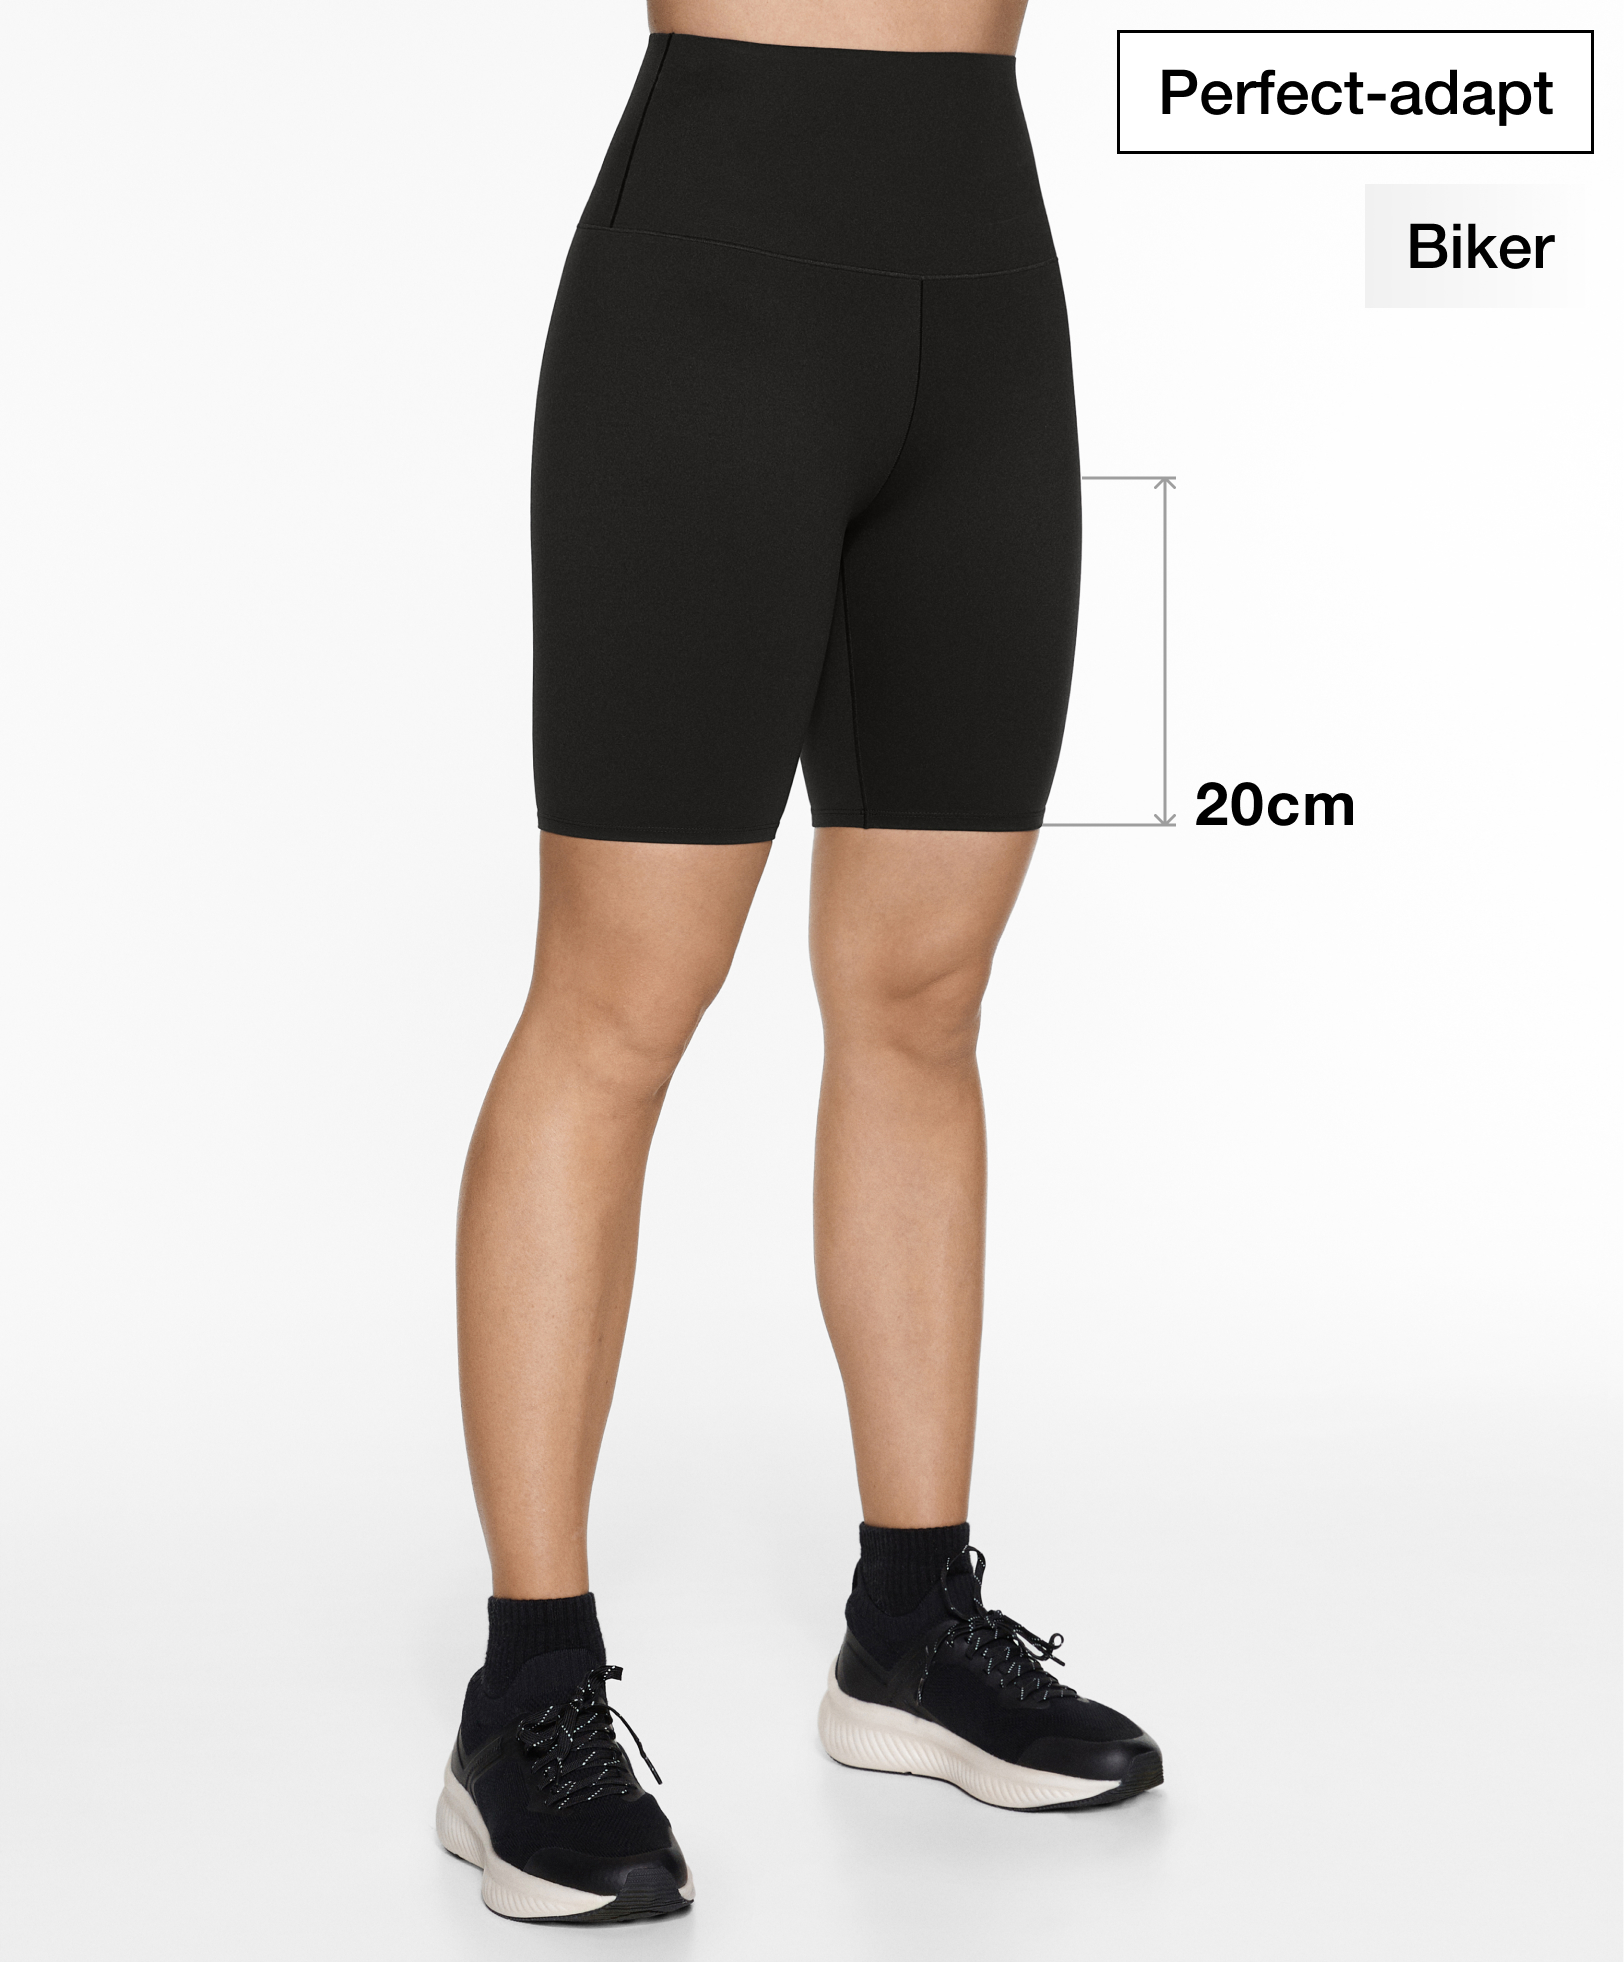 Perfect-adapt high-rise 20cm cycle leggings